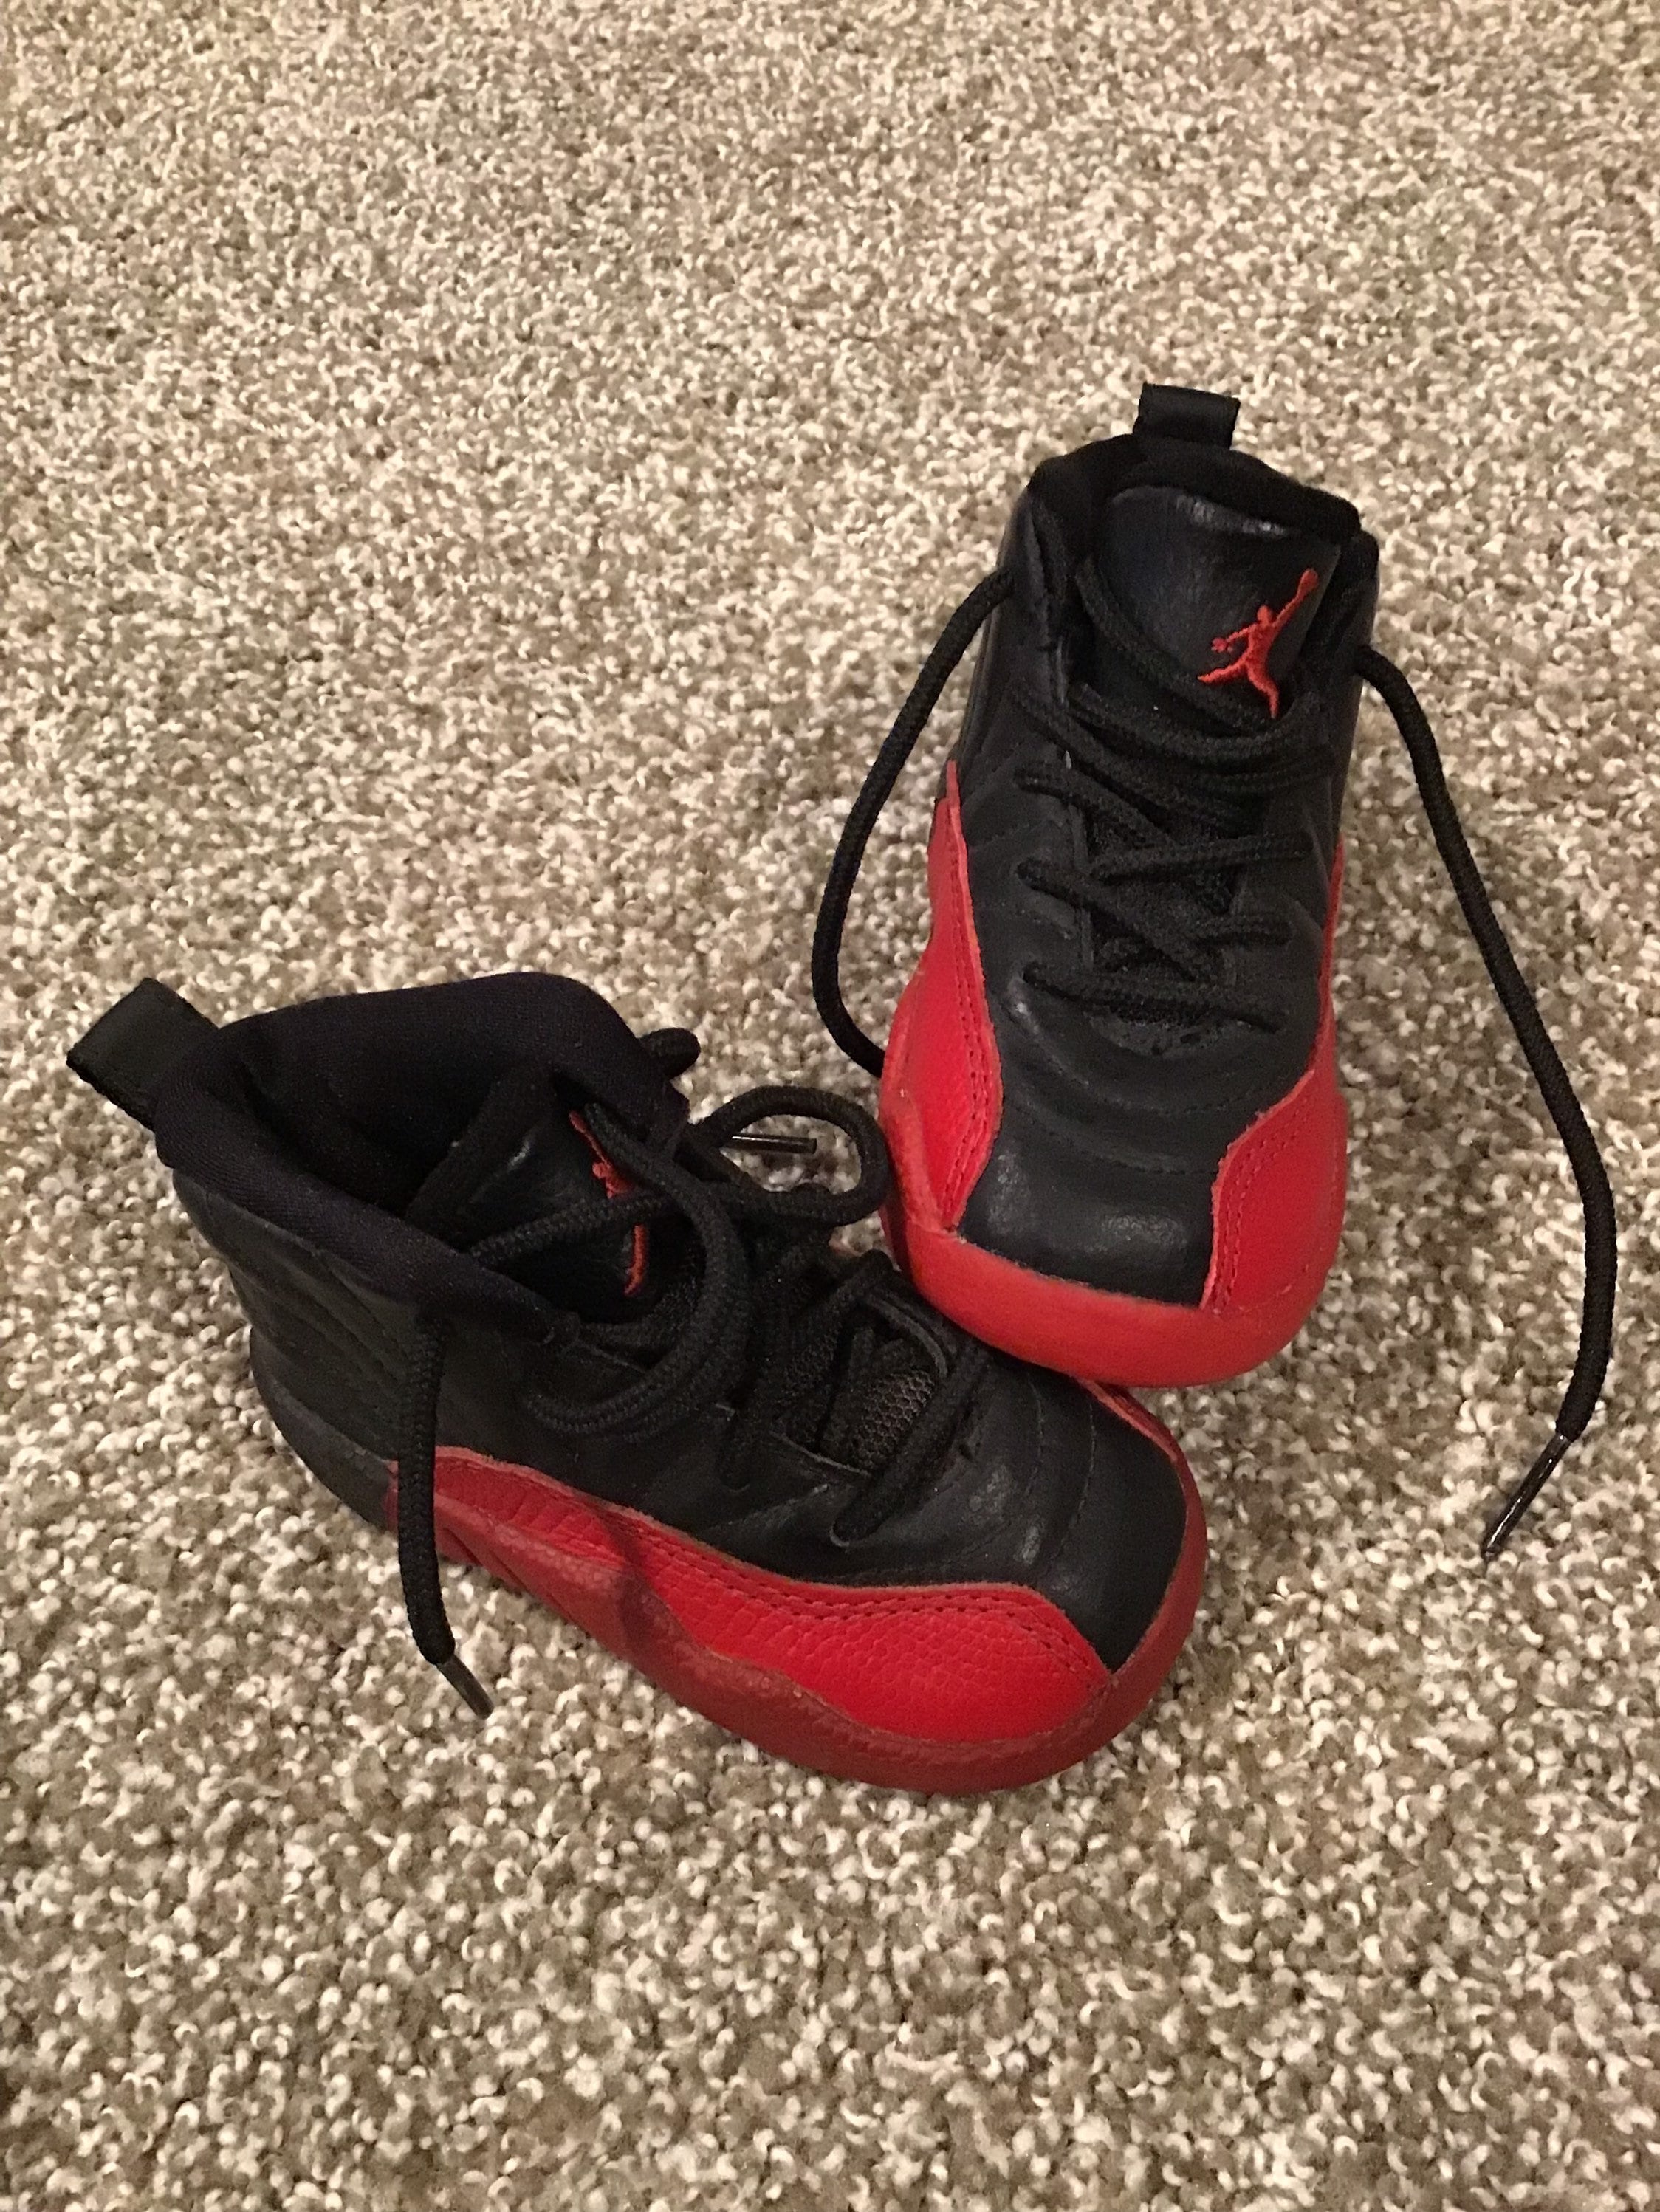 Chicago Bulls Michael Jordan Nike Retro Baby Shoes Size 4c - Etsy